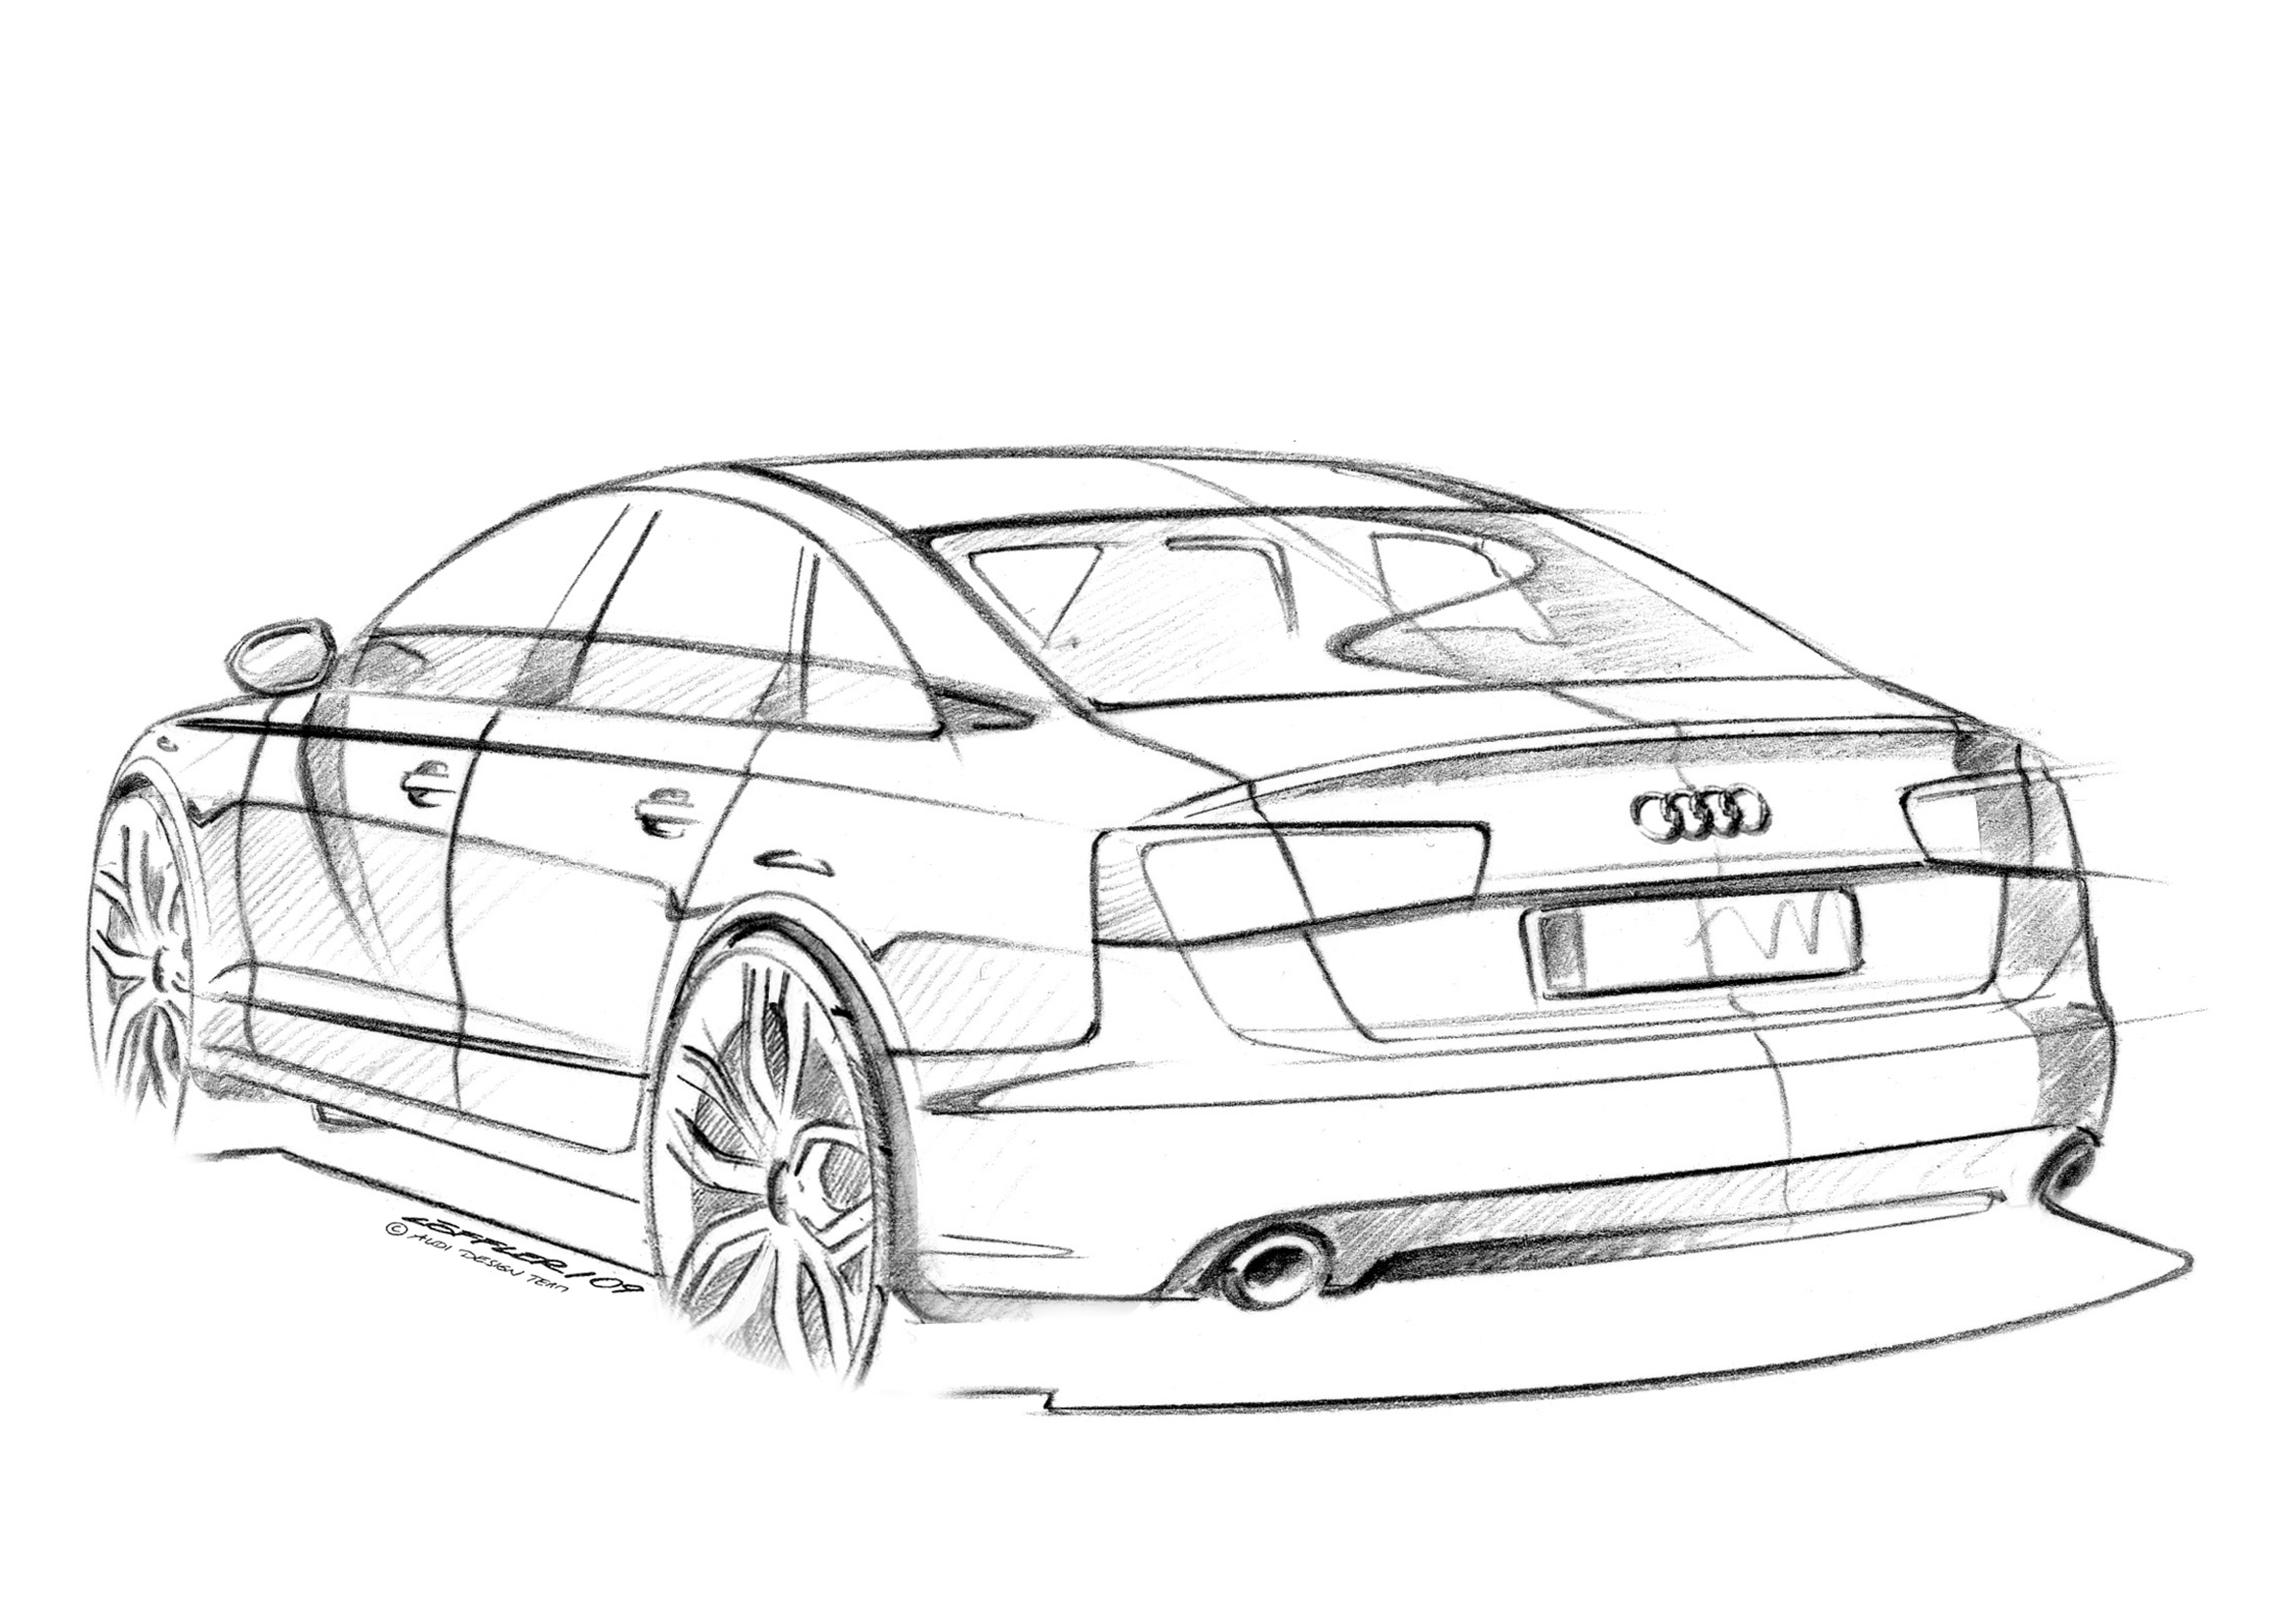 Картинка а 4 нарисована. Раскраска Volkswagen Passat b6. Раскраска Audi a6 c6. Audi a4 Allroad раскраска. Ауди а4 кватро раскраска.